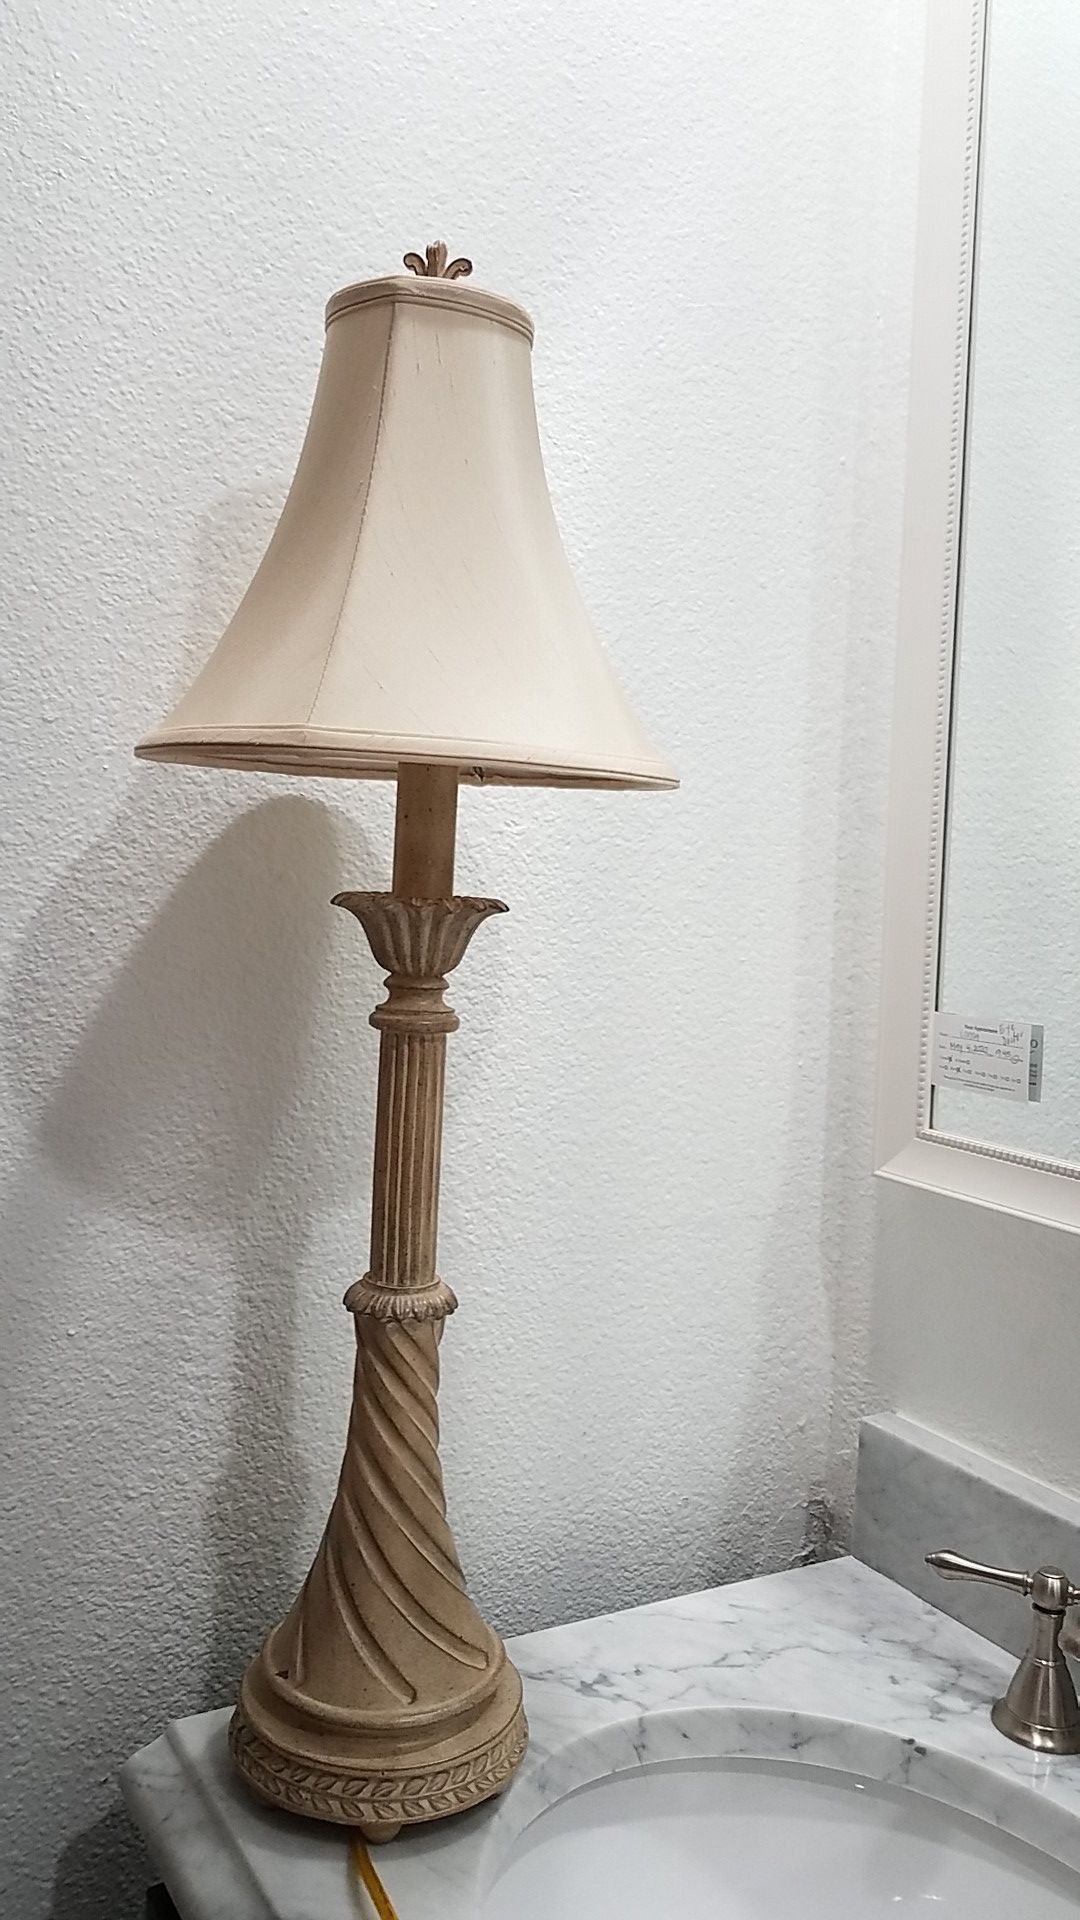 31" tall 10"X10" silk shade stone-like lamp shade a little heavy